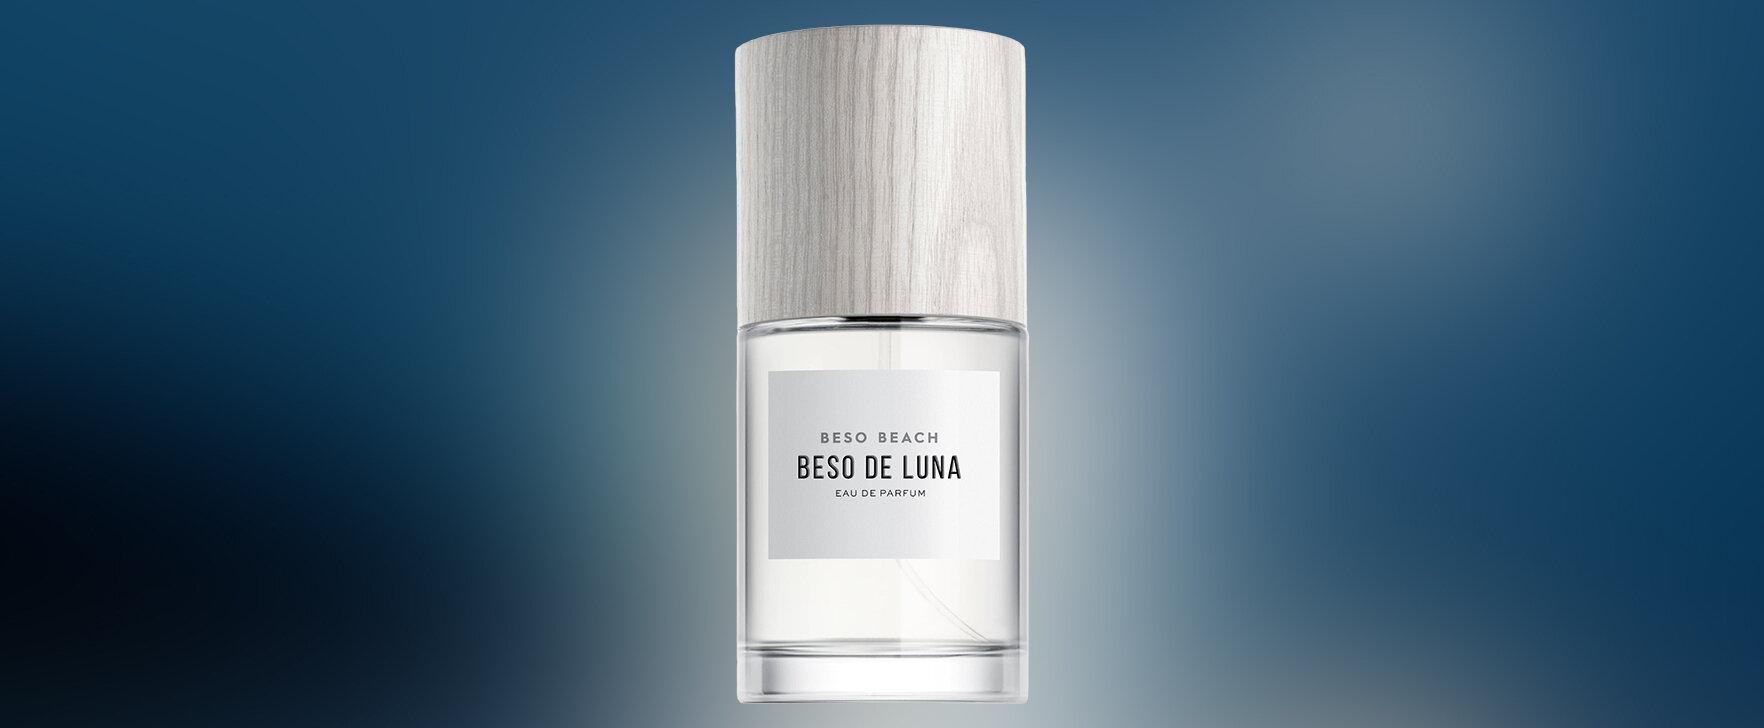 Inspired by Moonlight: The New Eau de Parfum Beso de Luna by Beso Beach 